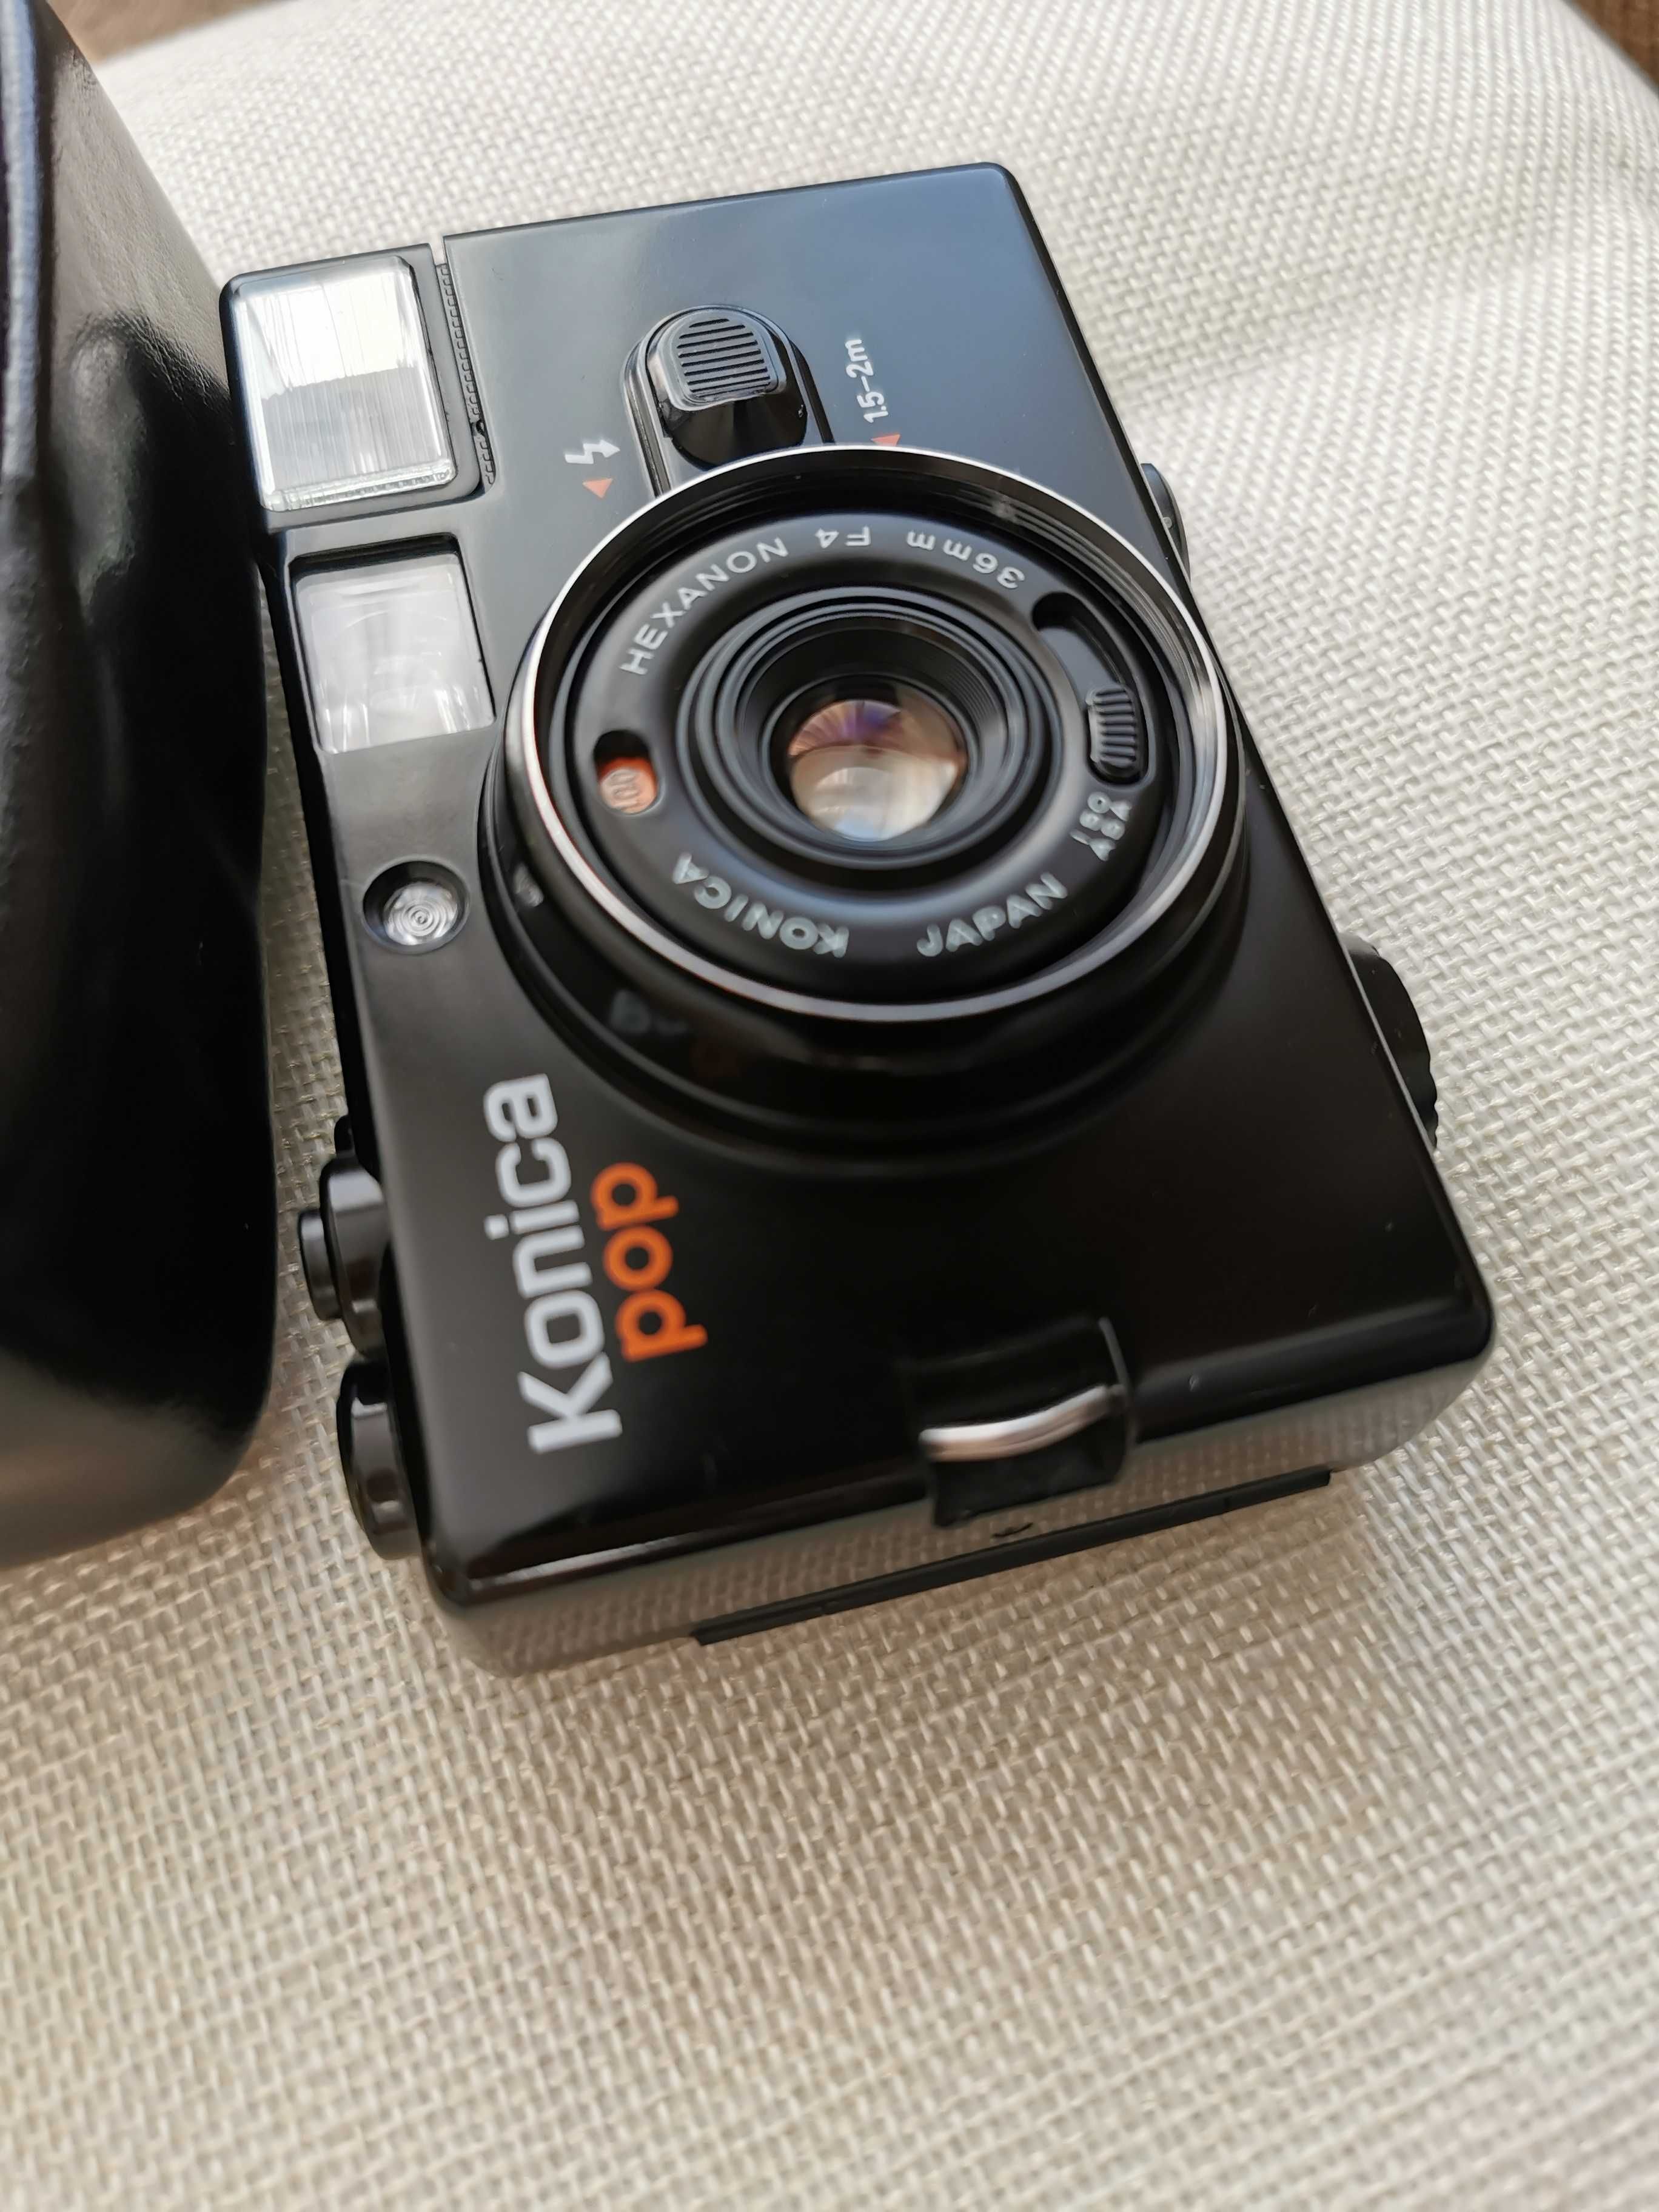 Aparat analogowy KONICA POP stan kolekcjonerski Nikon olimpus pentax